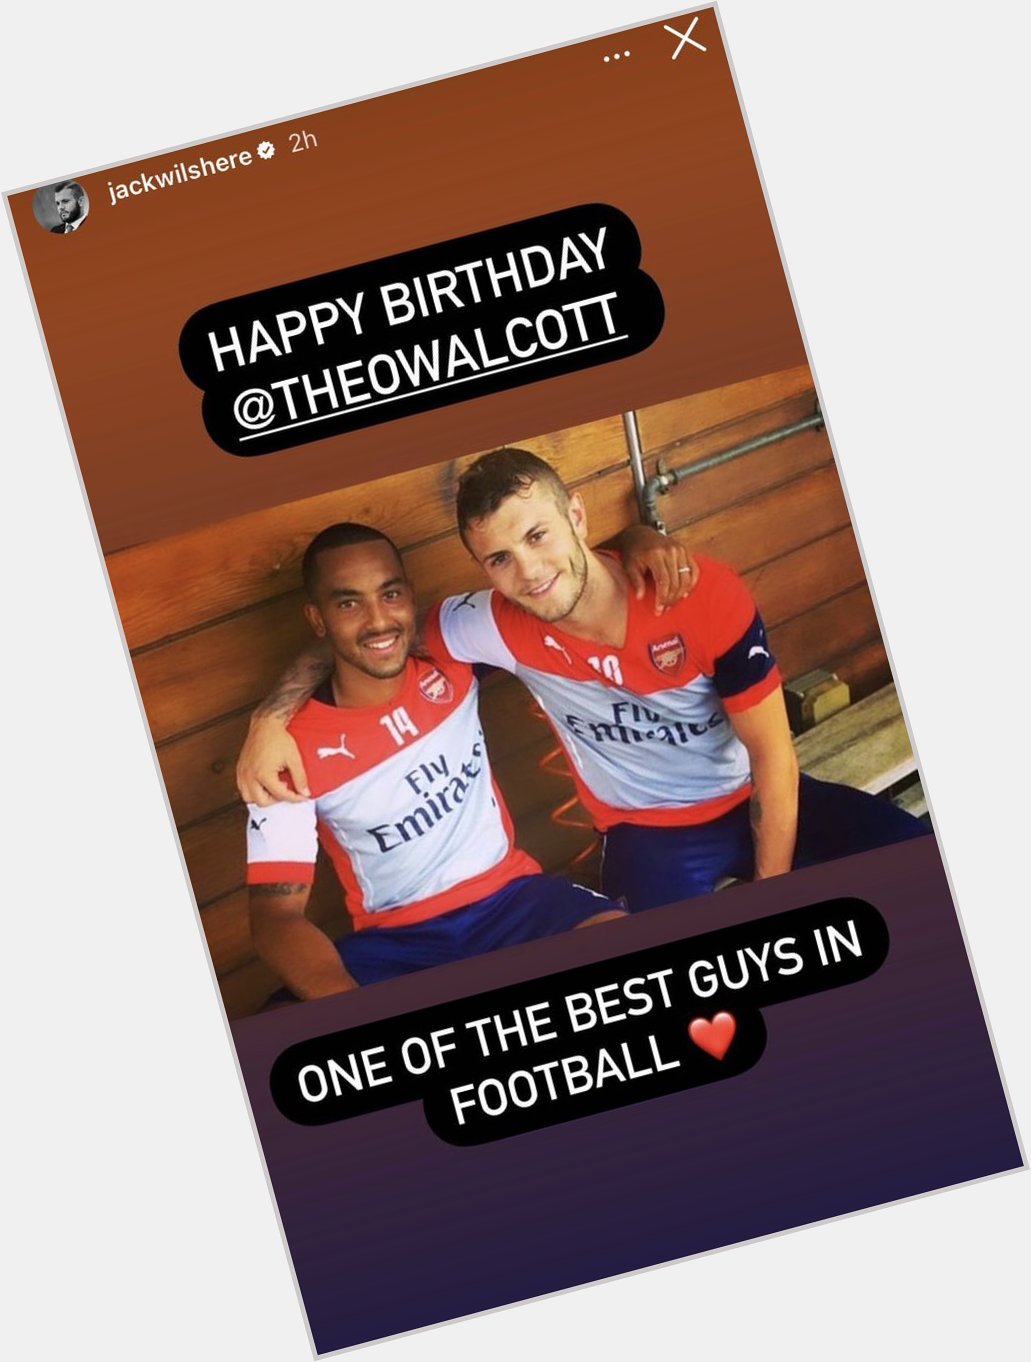 Jack Wilshere wishing Theo Walcott on Instagram for his birthday! 

Happy birthday, Theo 